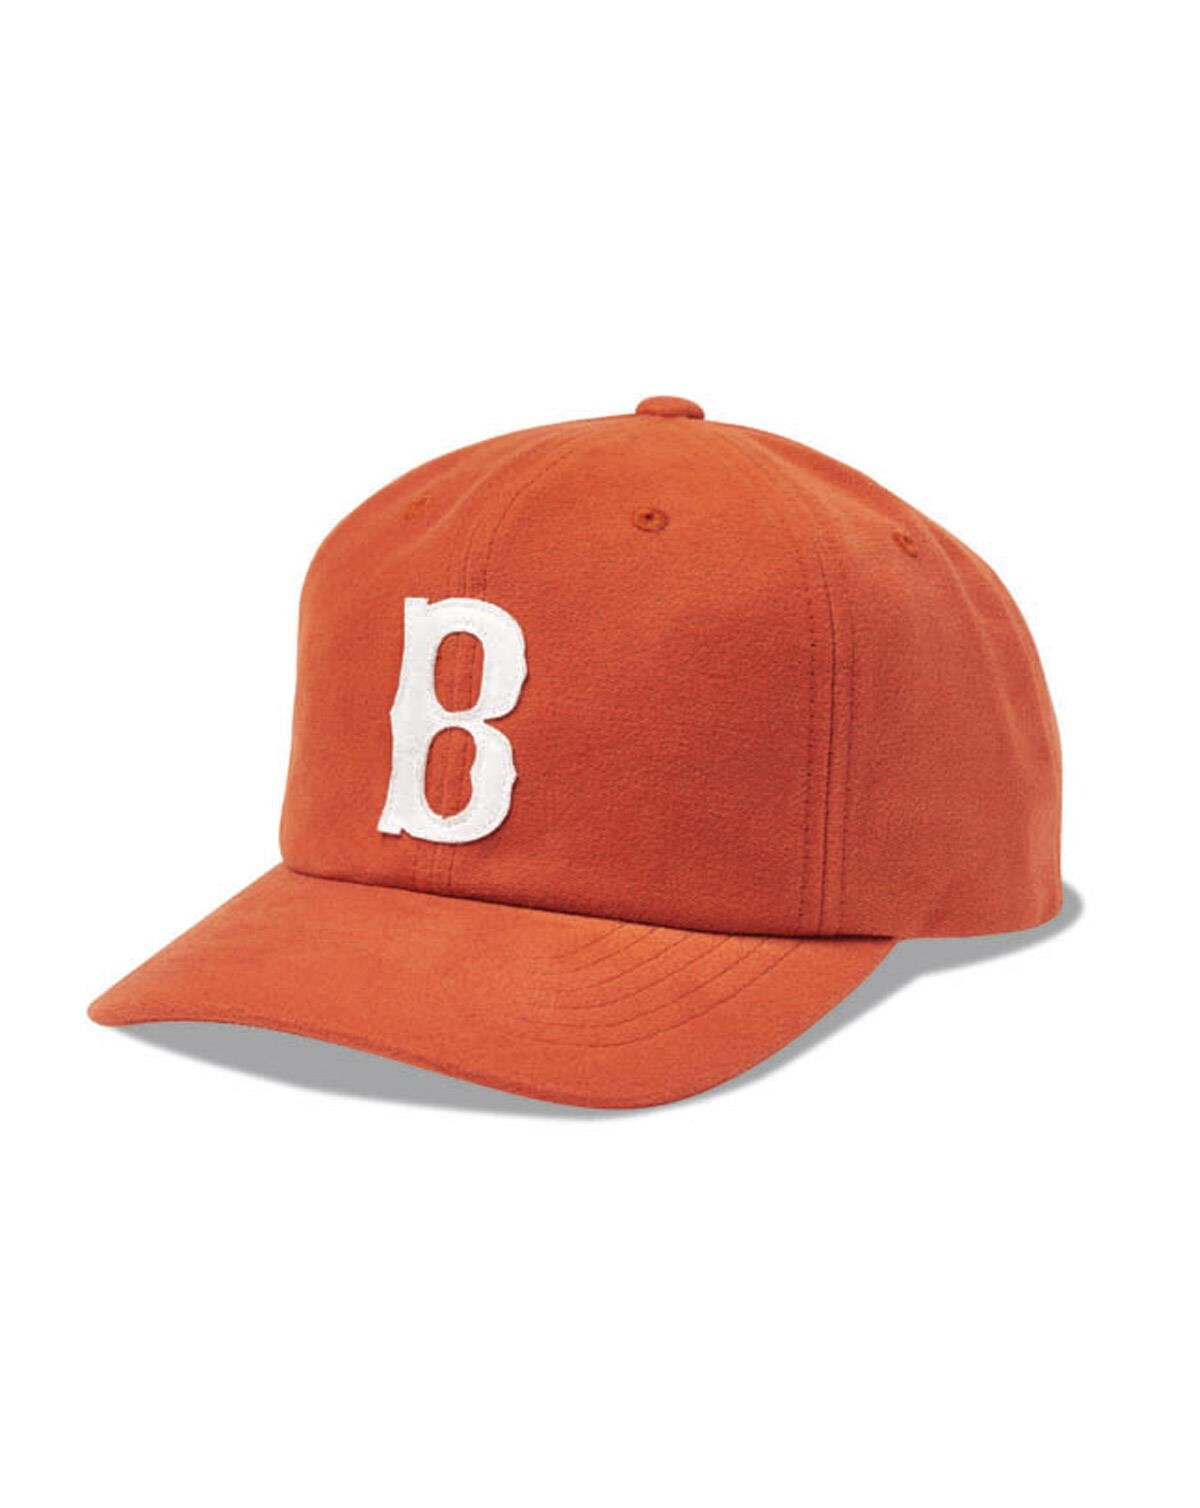 Brixton Big B MP Cap (Orange, One Size)